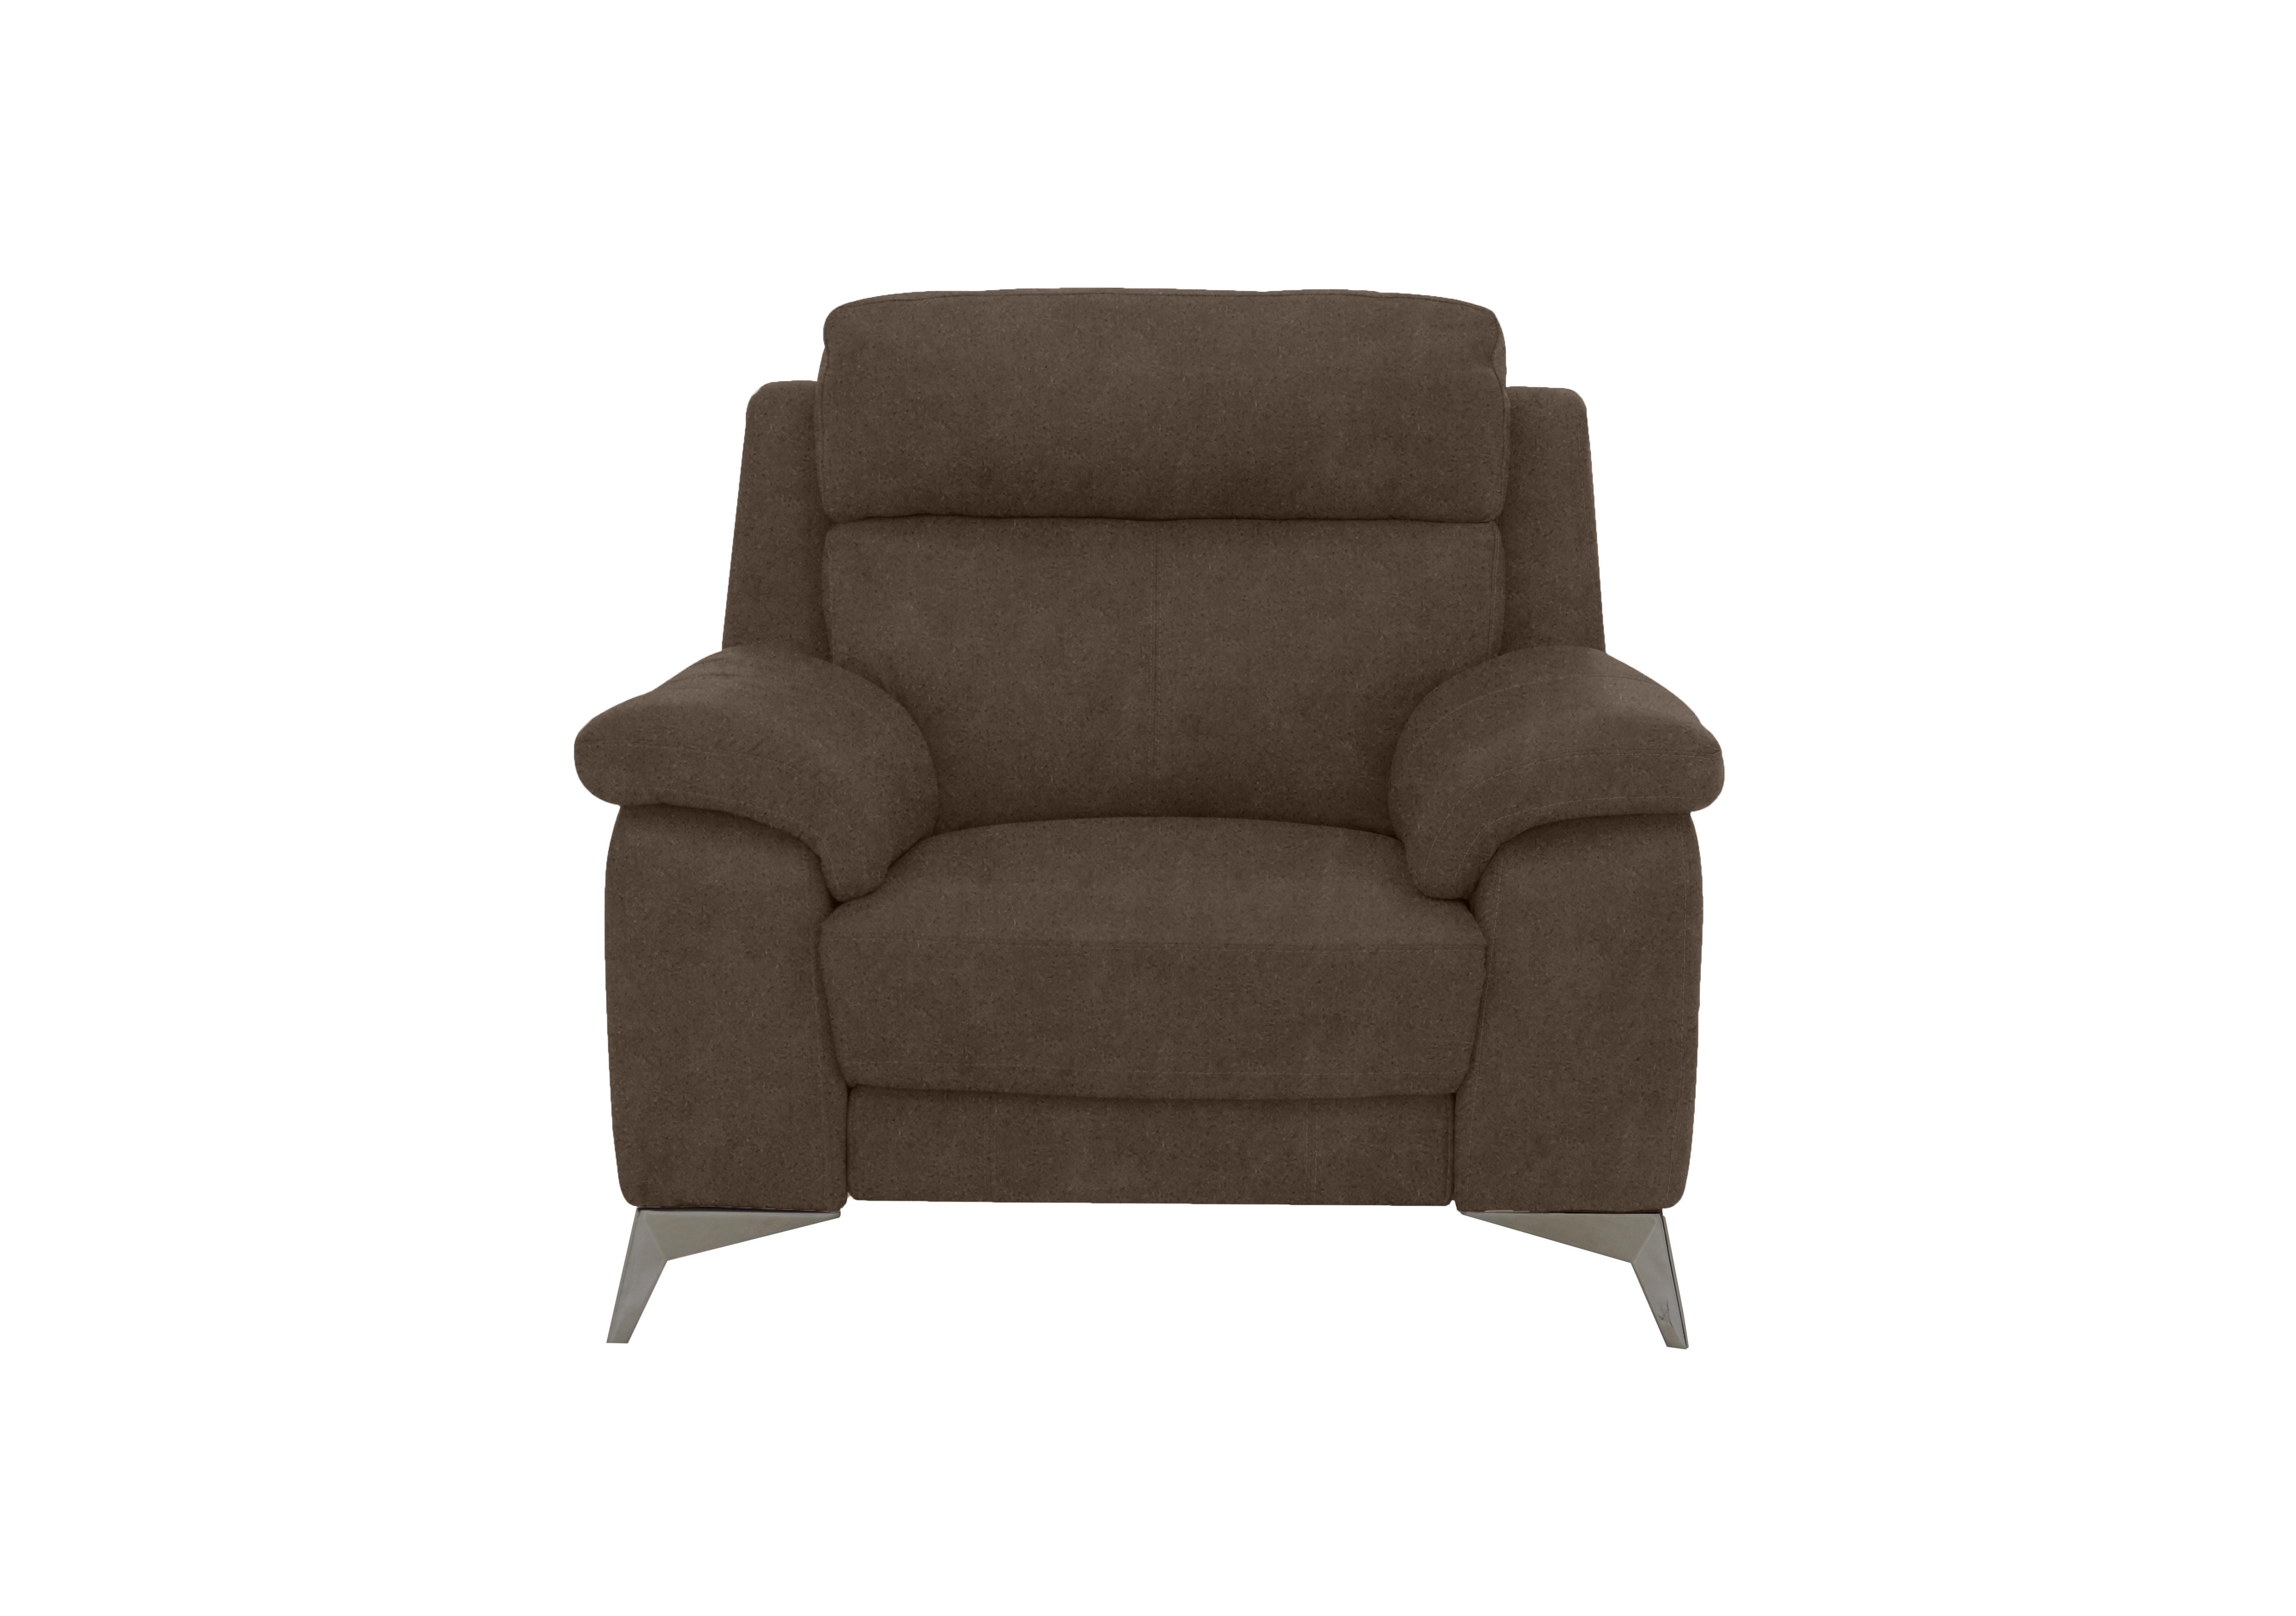 Missouri Fabric Recliner Armchair with Power Headrest in Bfa-Blj-R16 Grey on Furniture Village